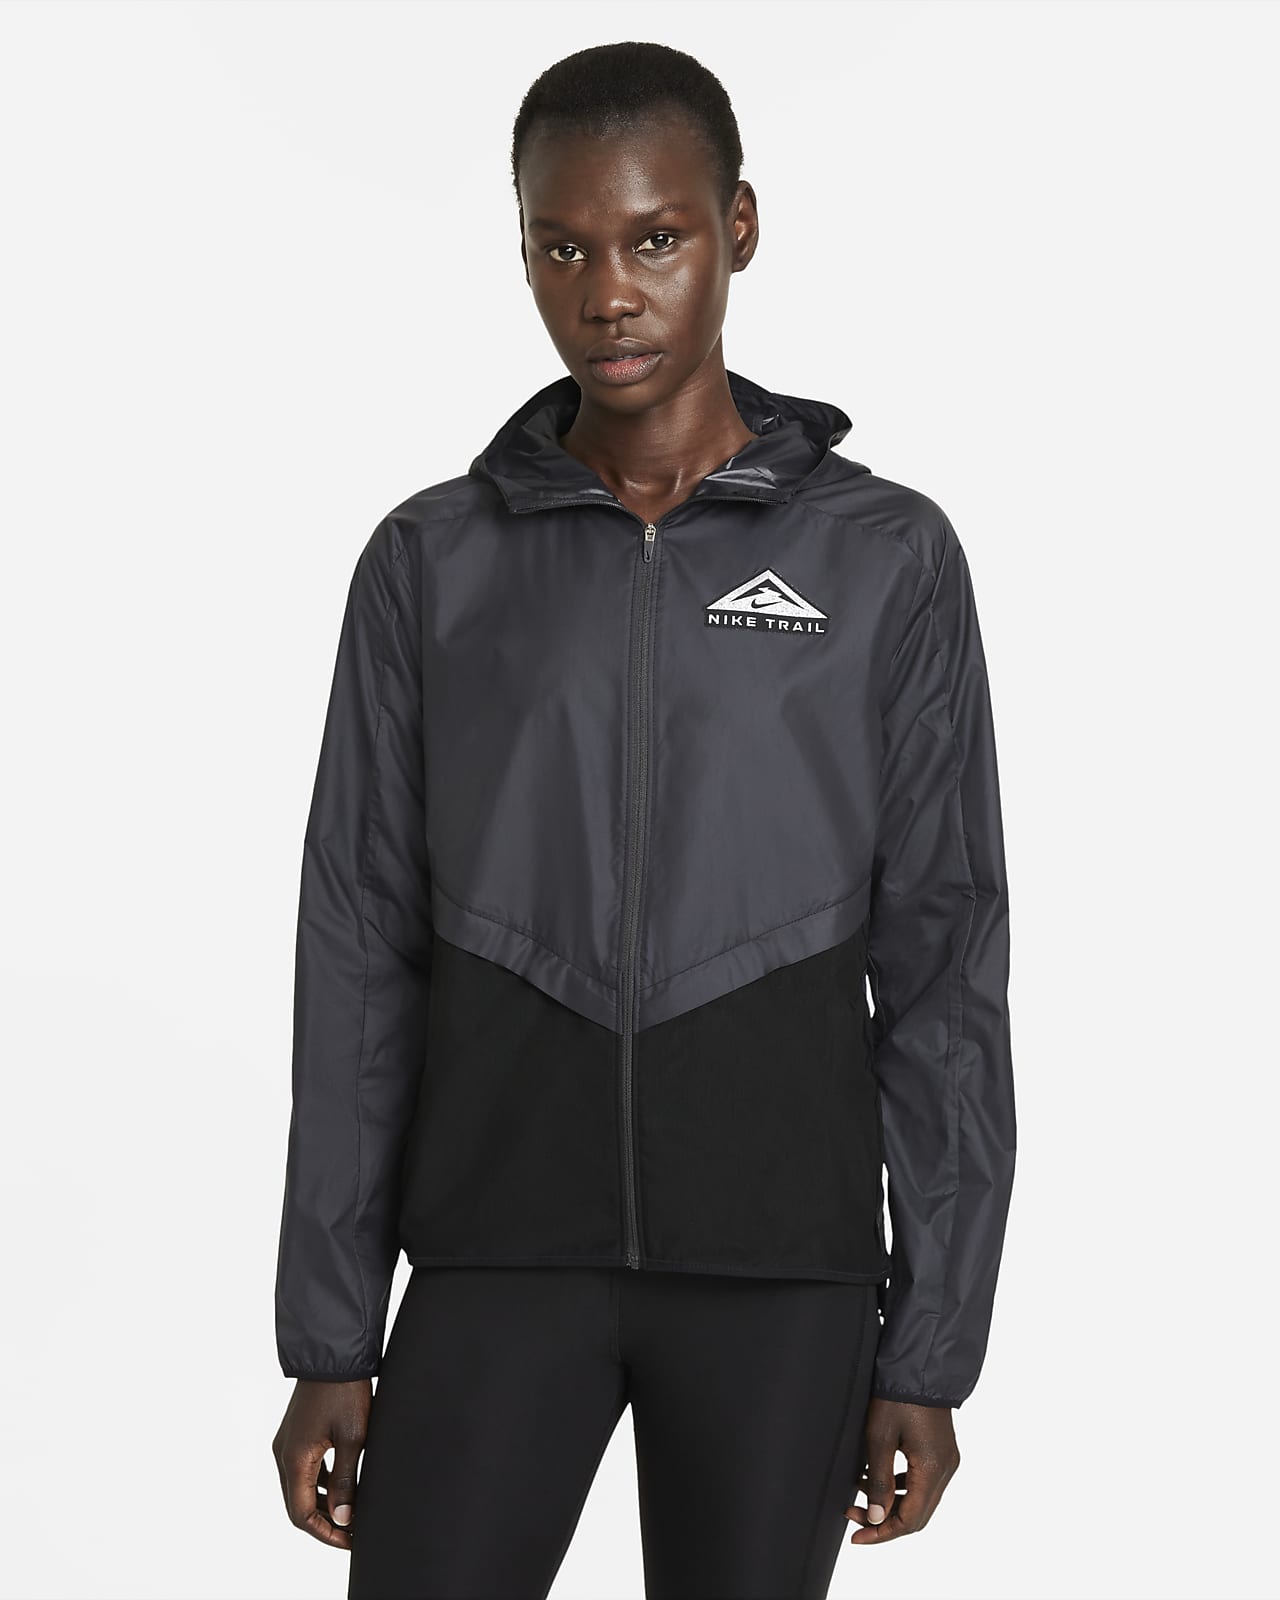 Nike Shield Arazi Tipi Kadın Koşu Ceketi